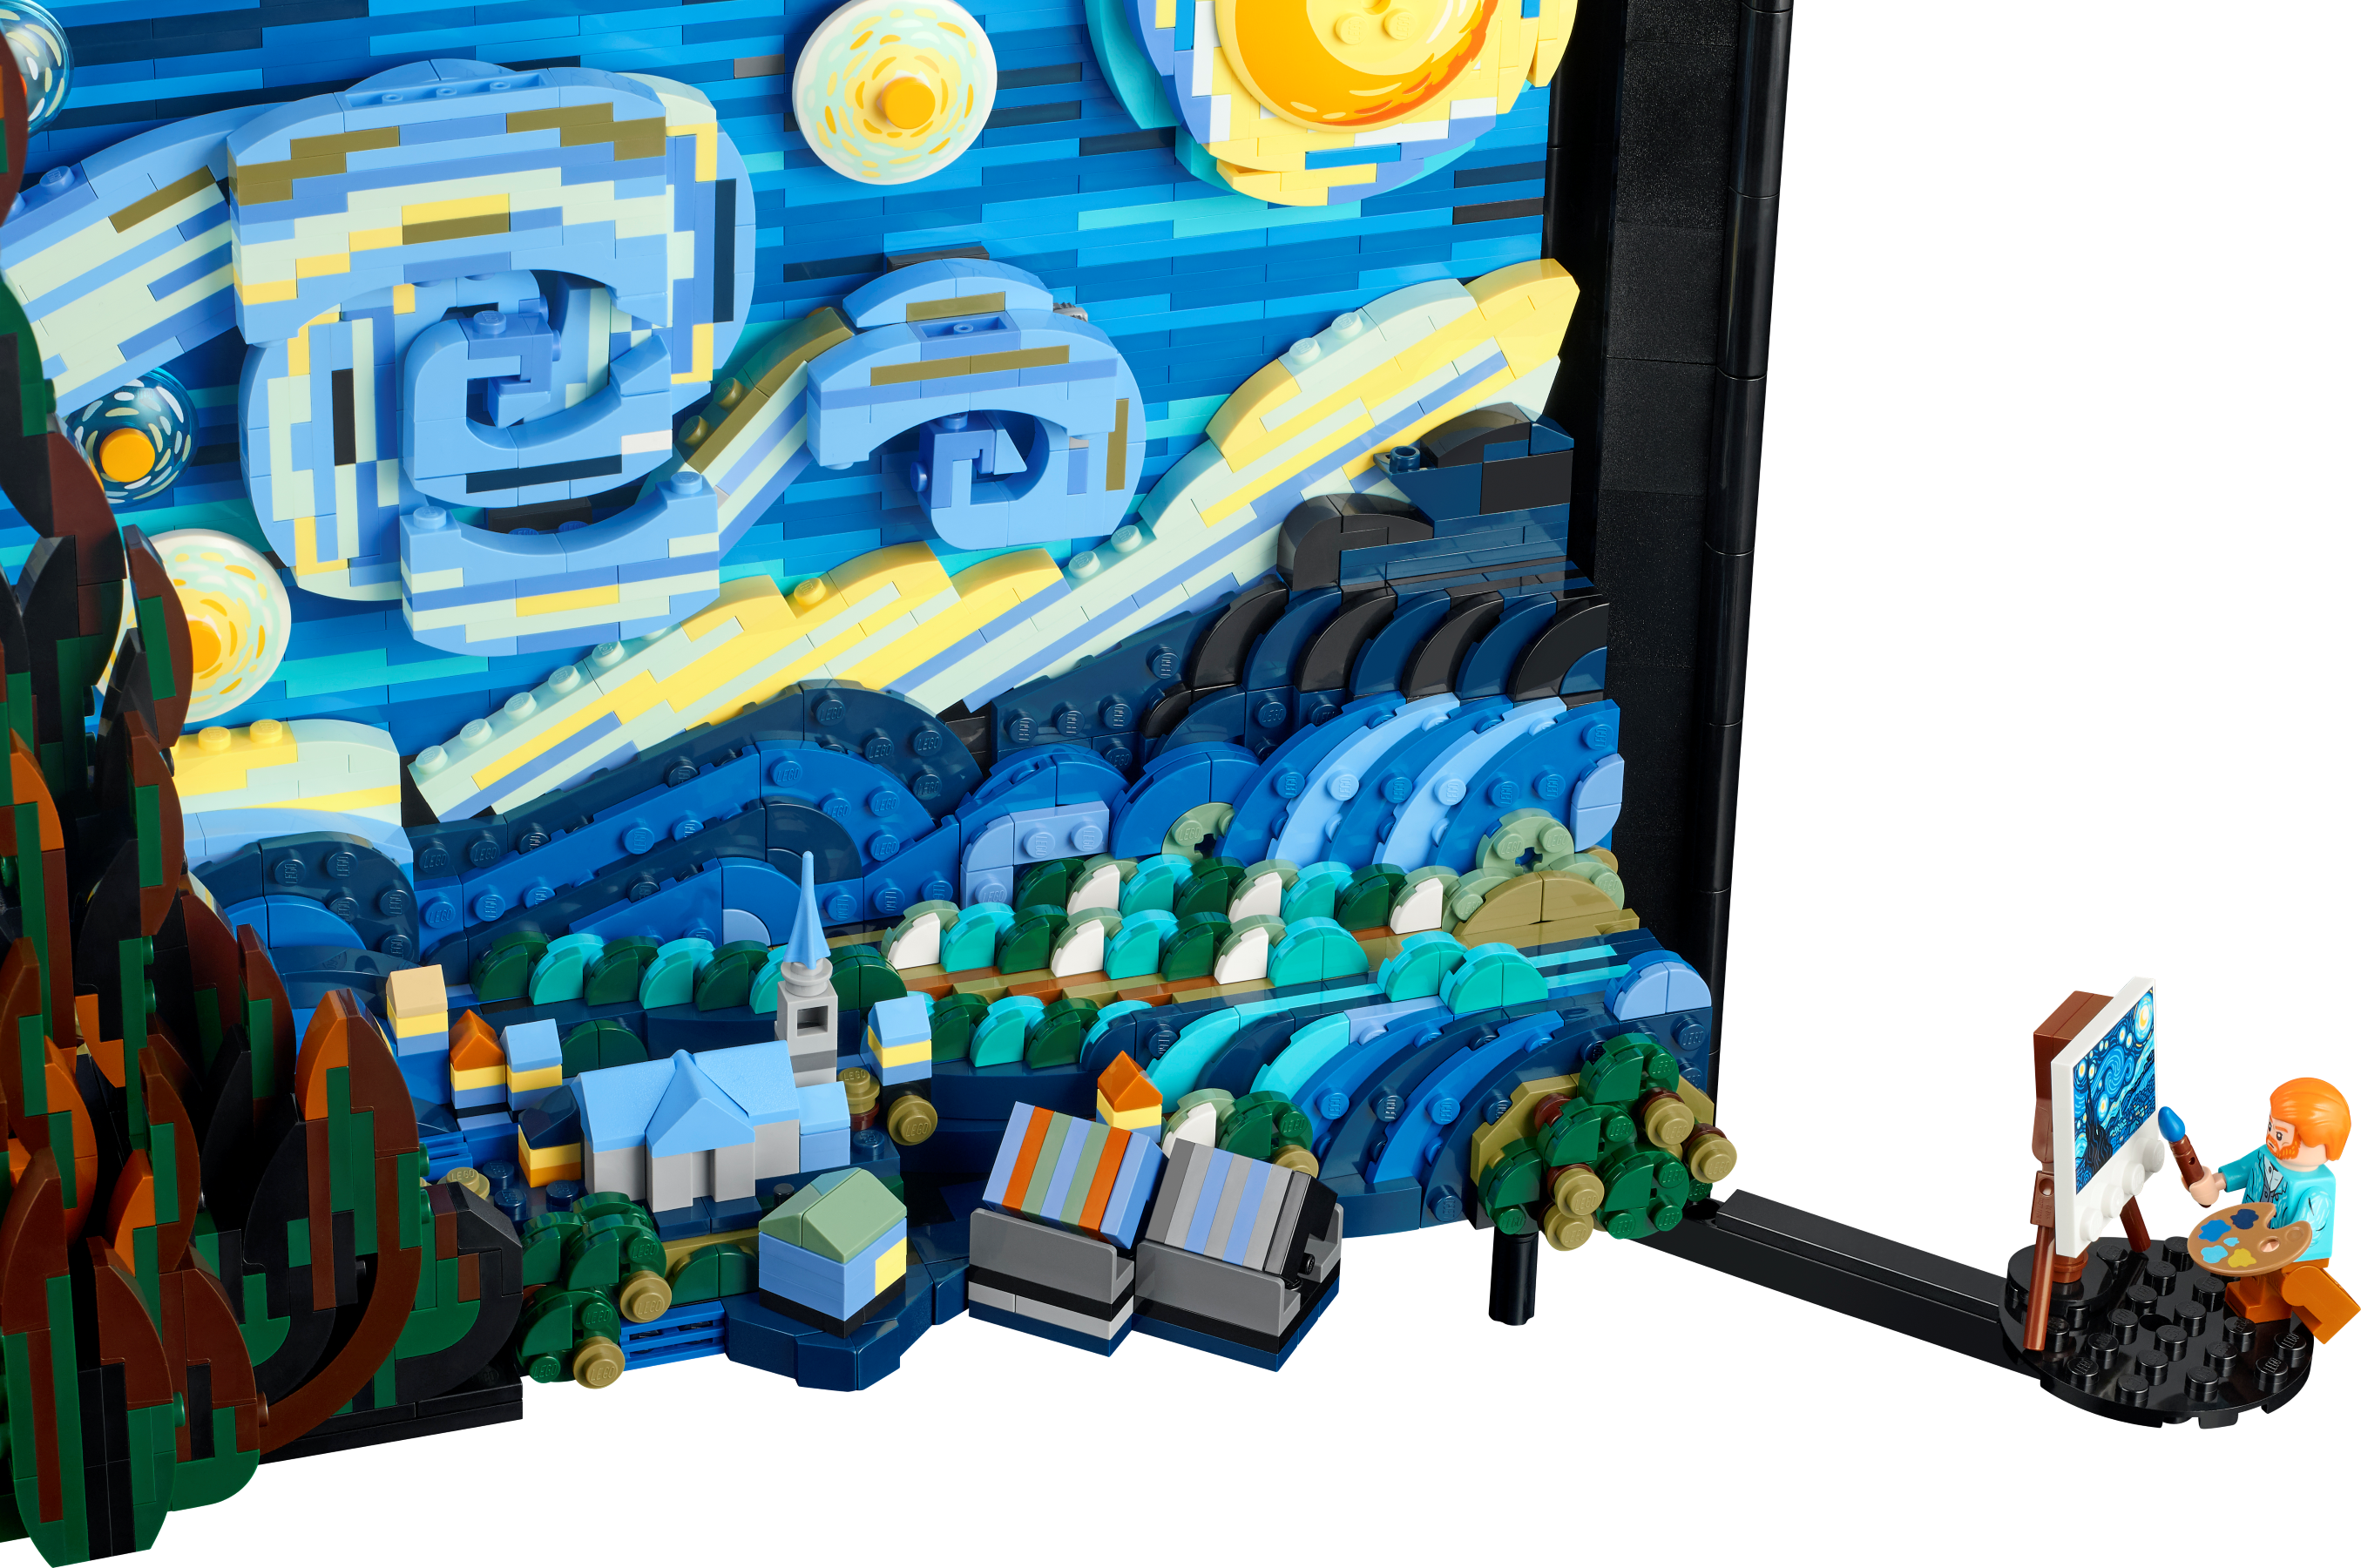 Teca L76  Per Set Lego 21333 Vincent Van Gogh - Notte Stellata – Showcase  Lab 🇮🇹